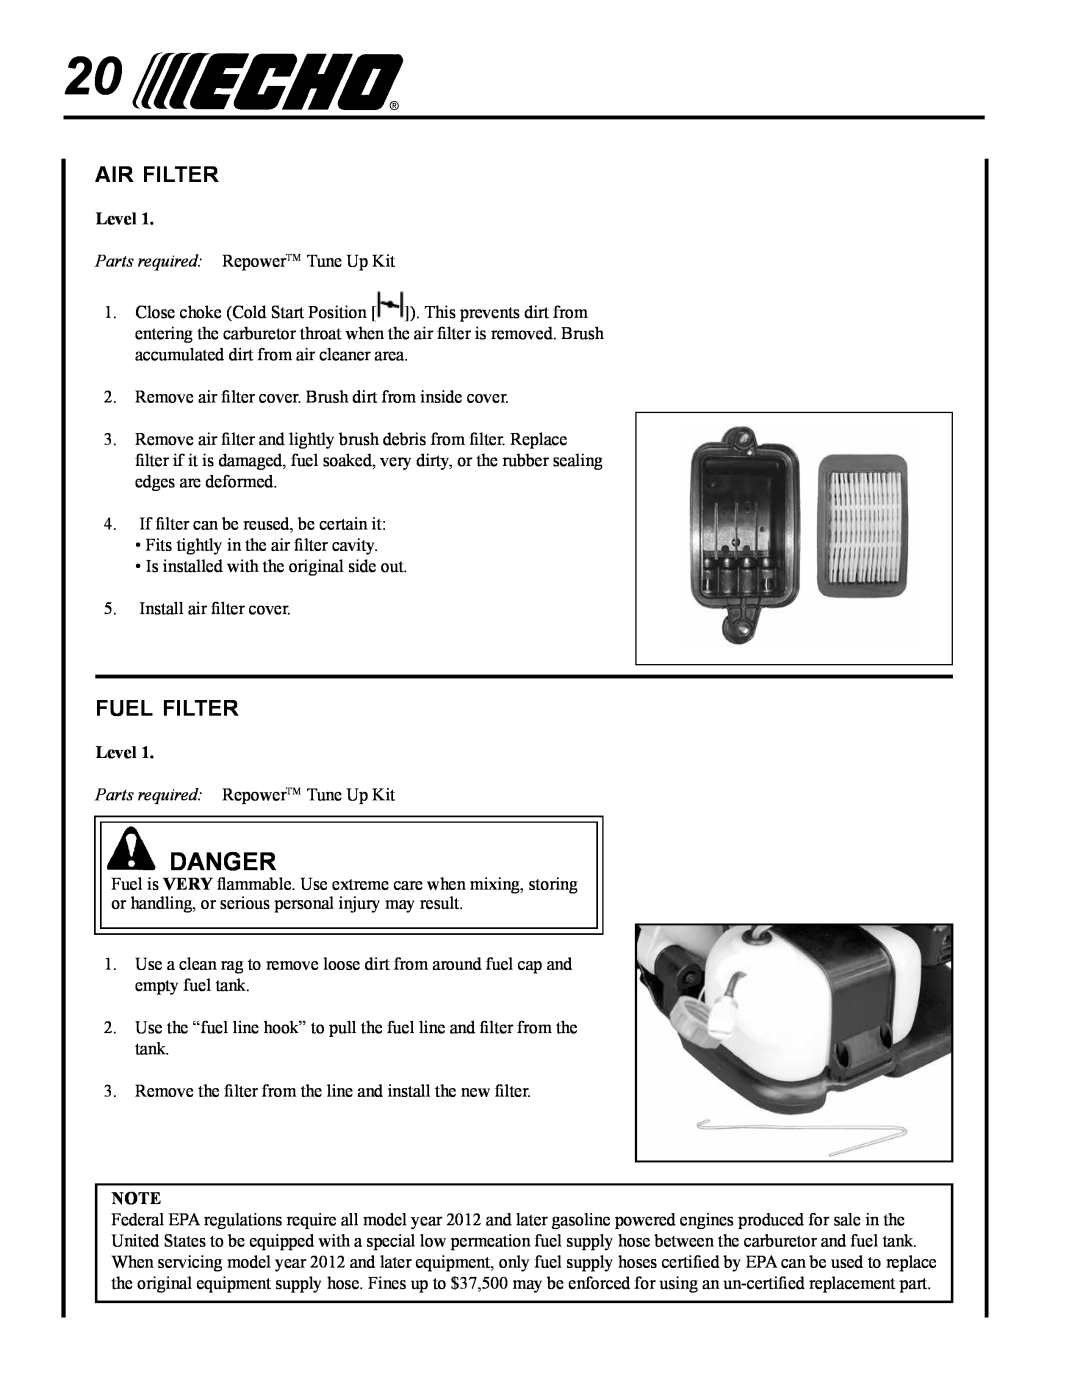 Echo PB-755S T, PB-755S H manual air filter, fuel filter, Level, Danger 